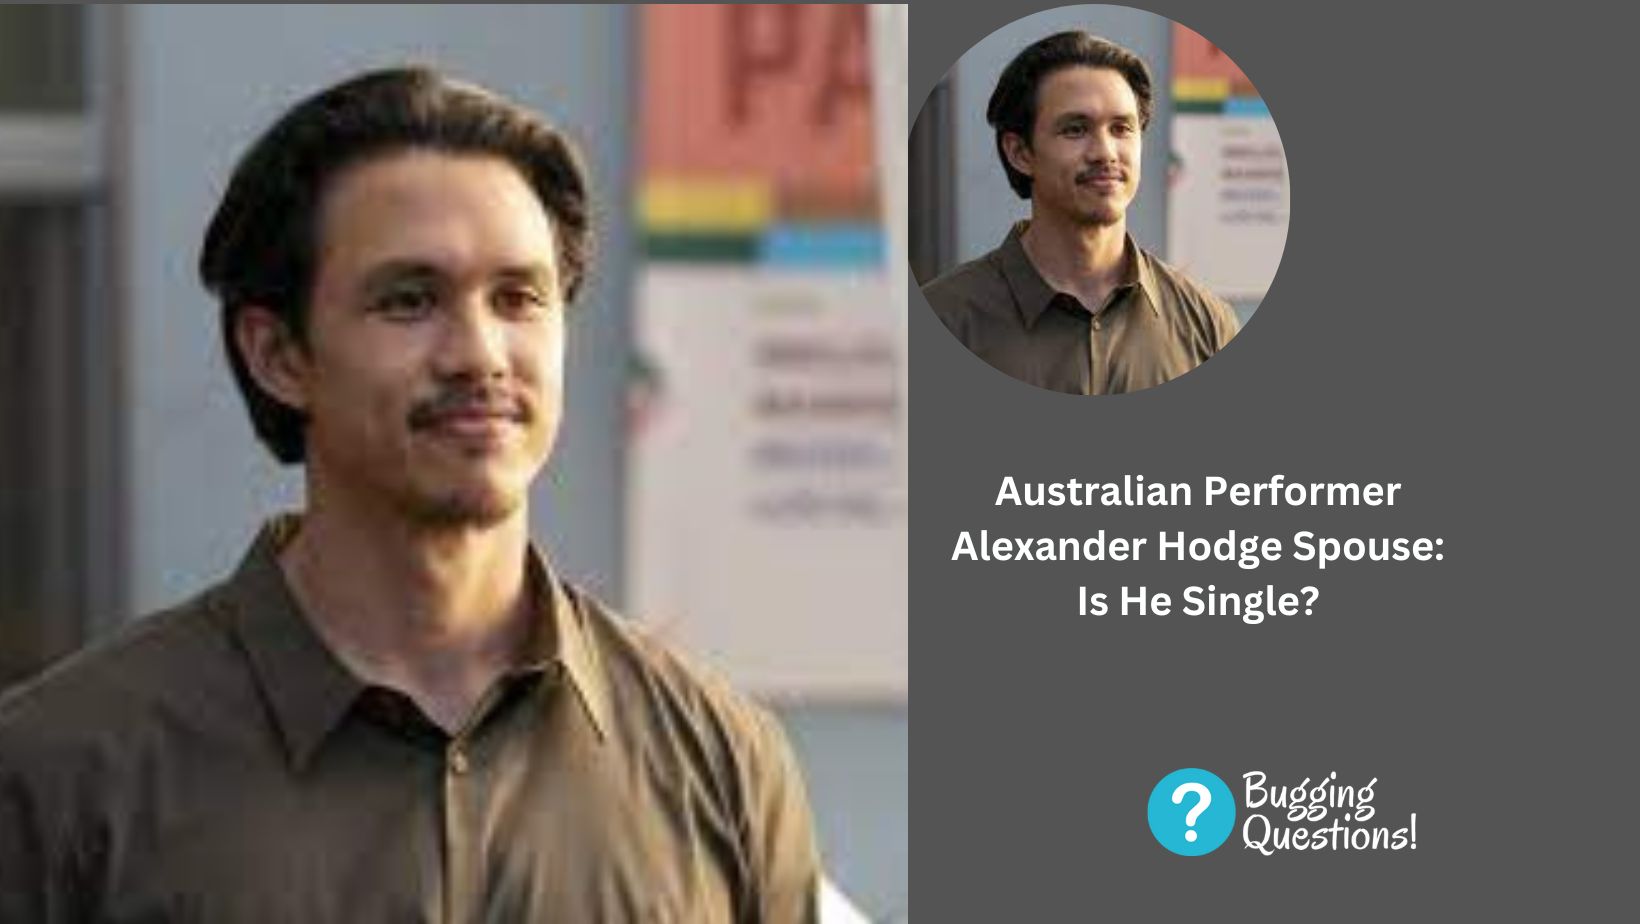 Australian Performer Alexander Hodge Spouse: Is He Single?